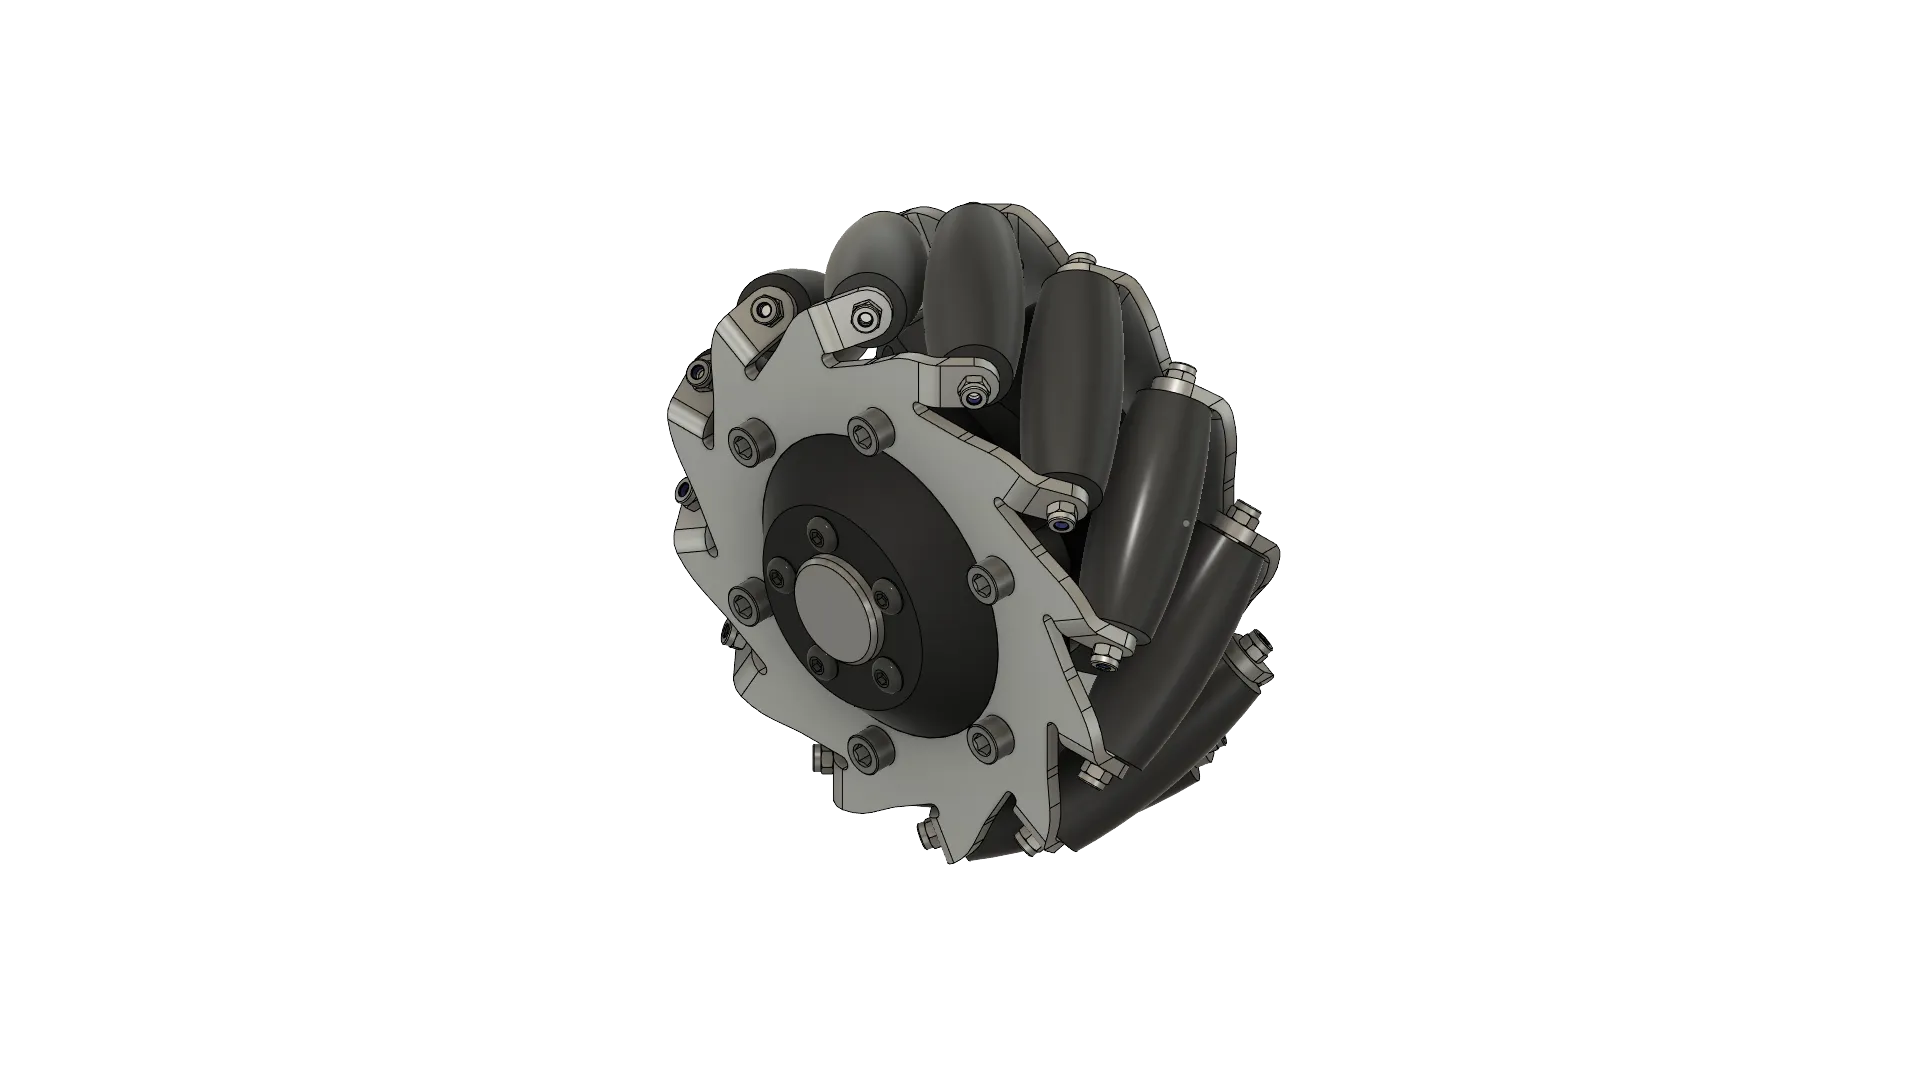 Visualization of mecanum wheel for Leo Rover